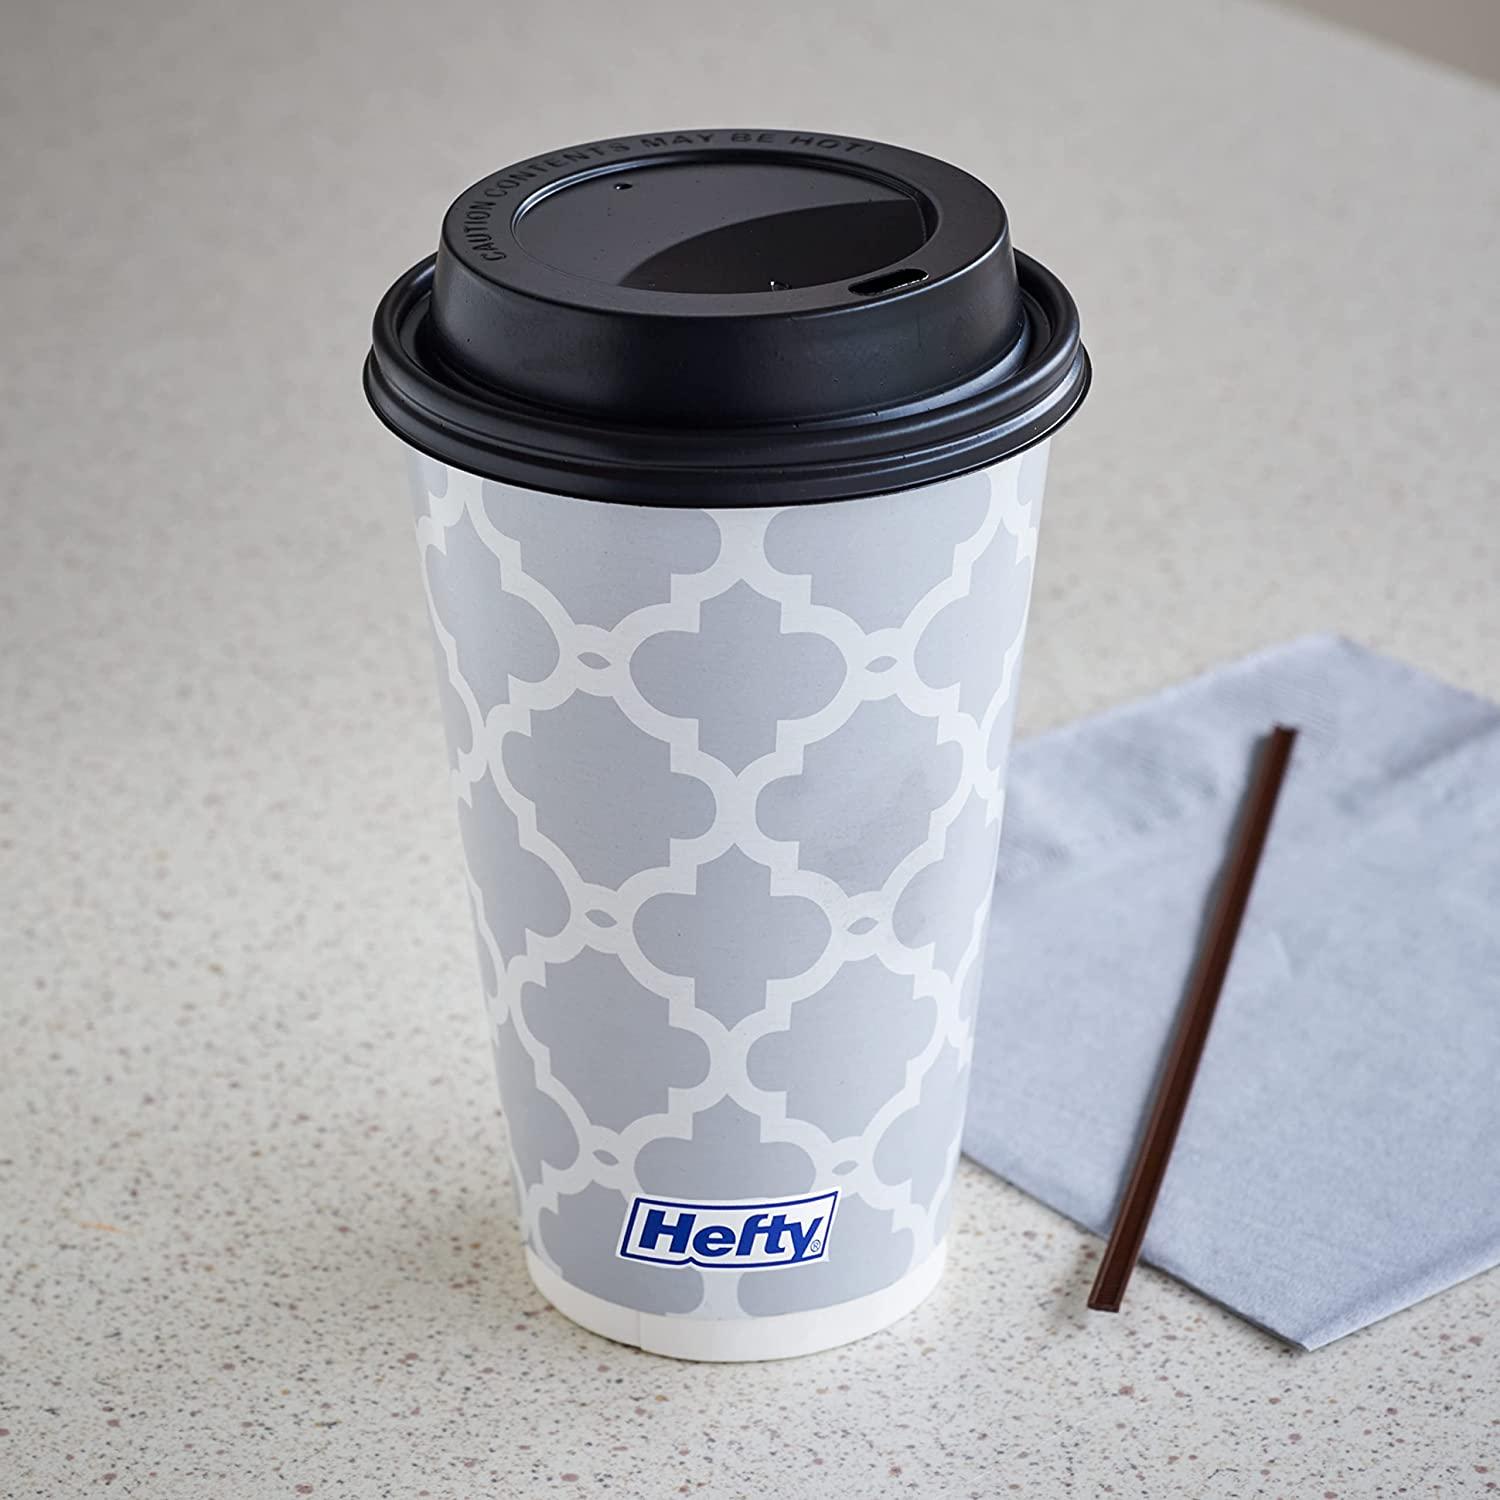 Hefty Hot Cups, To-Go, Leak Resistant Lids - 20 cups & lids